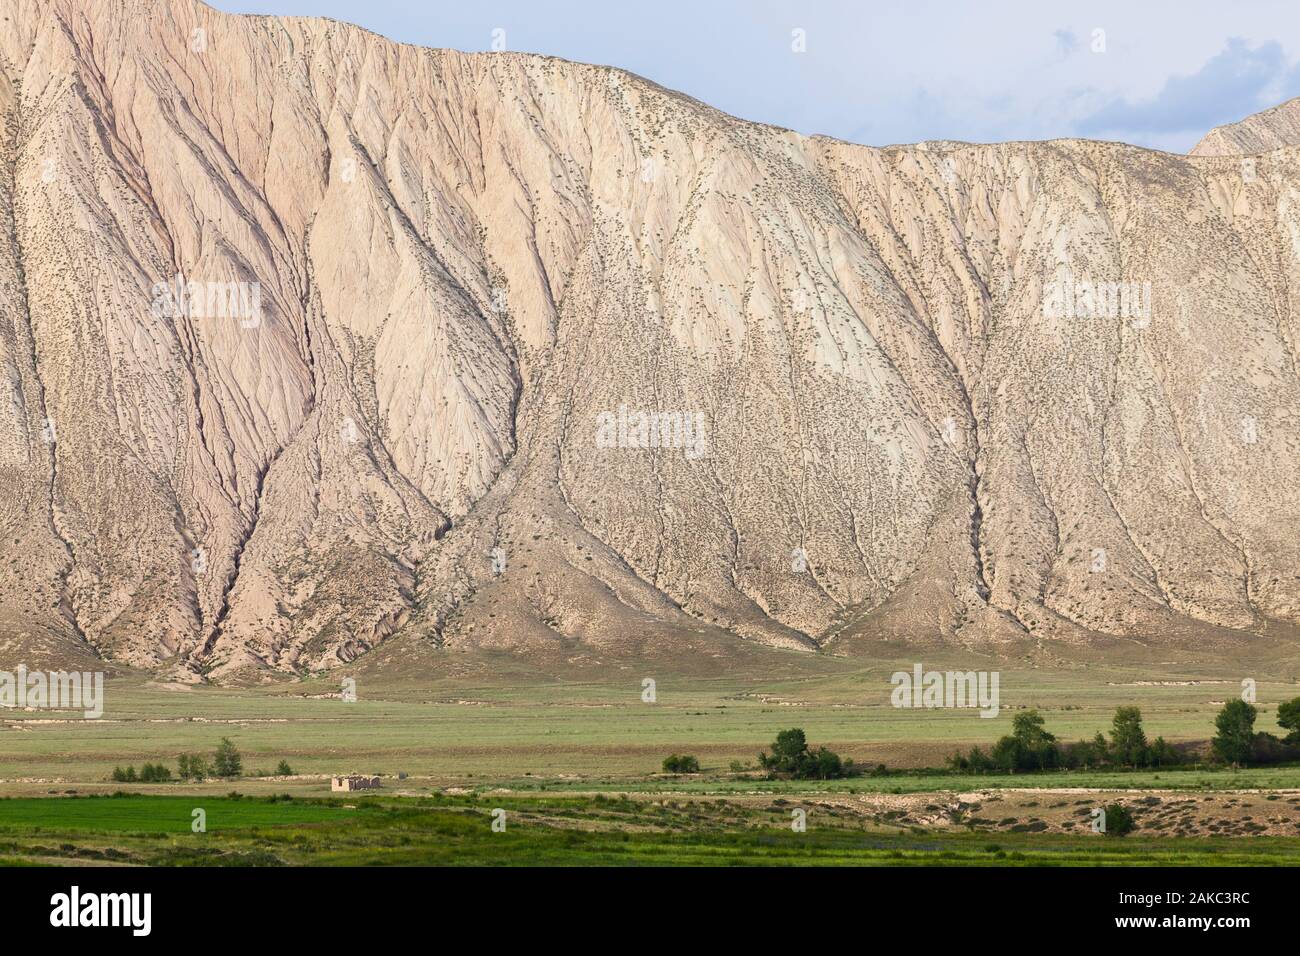 Kyrgyzstan, Naryn province, arid mountains Stock Photo